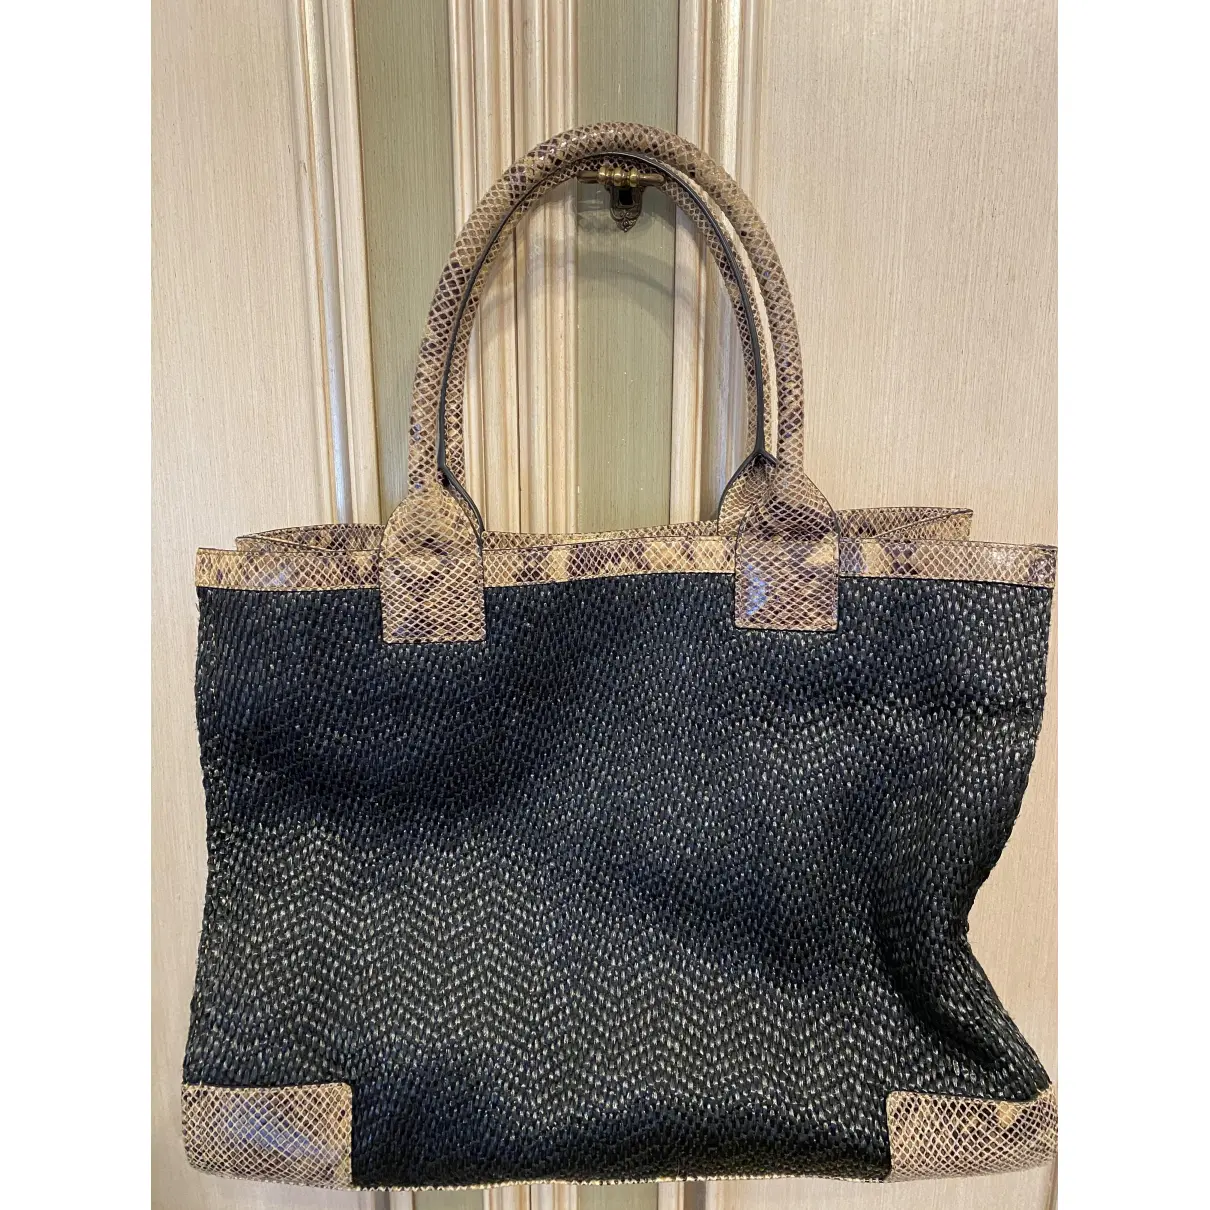 Luxury Tory Burch Handbags Women